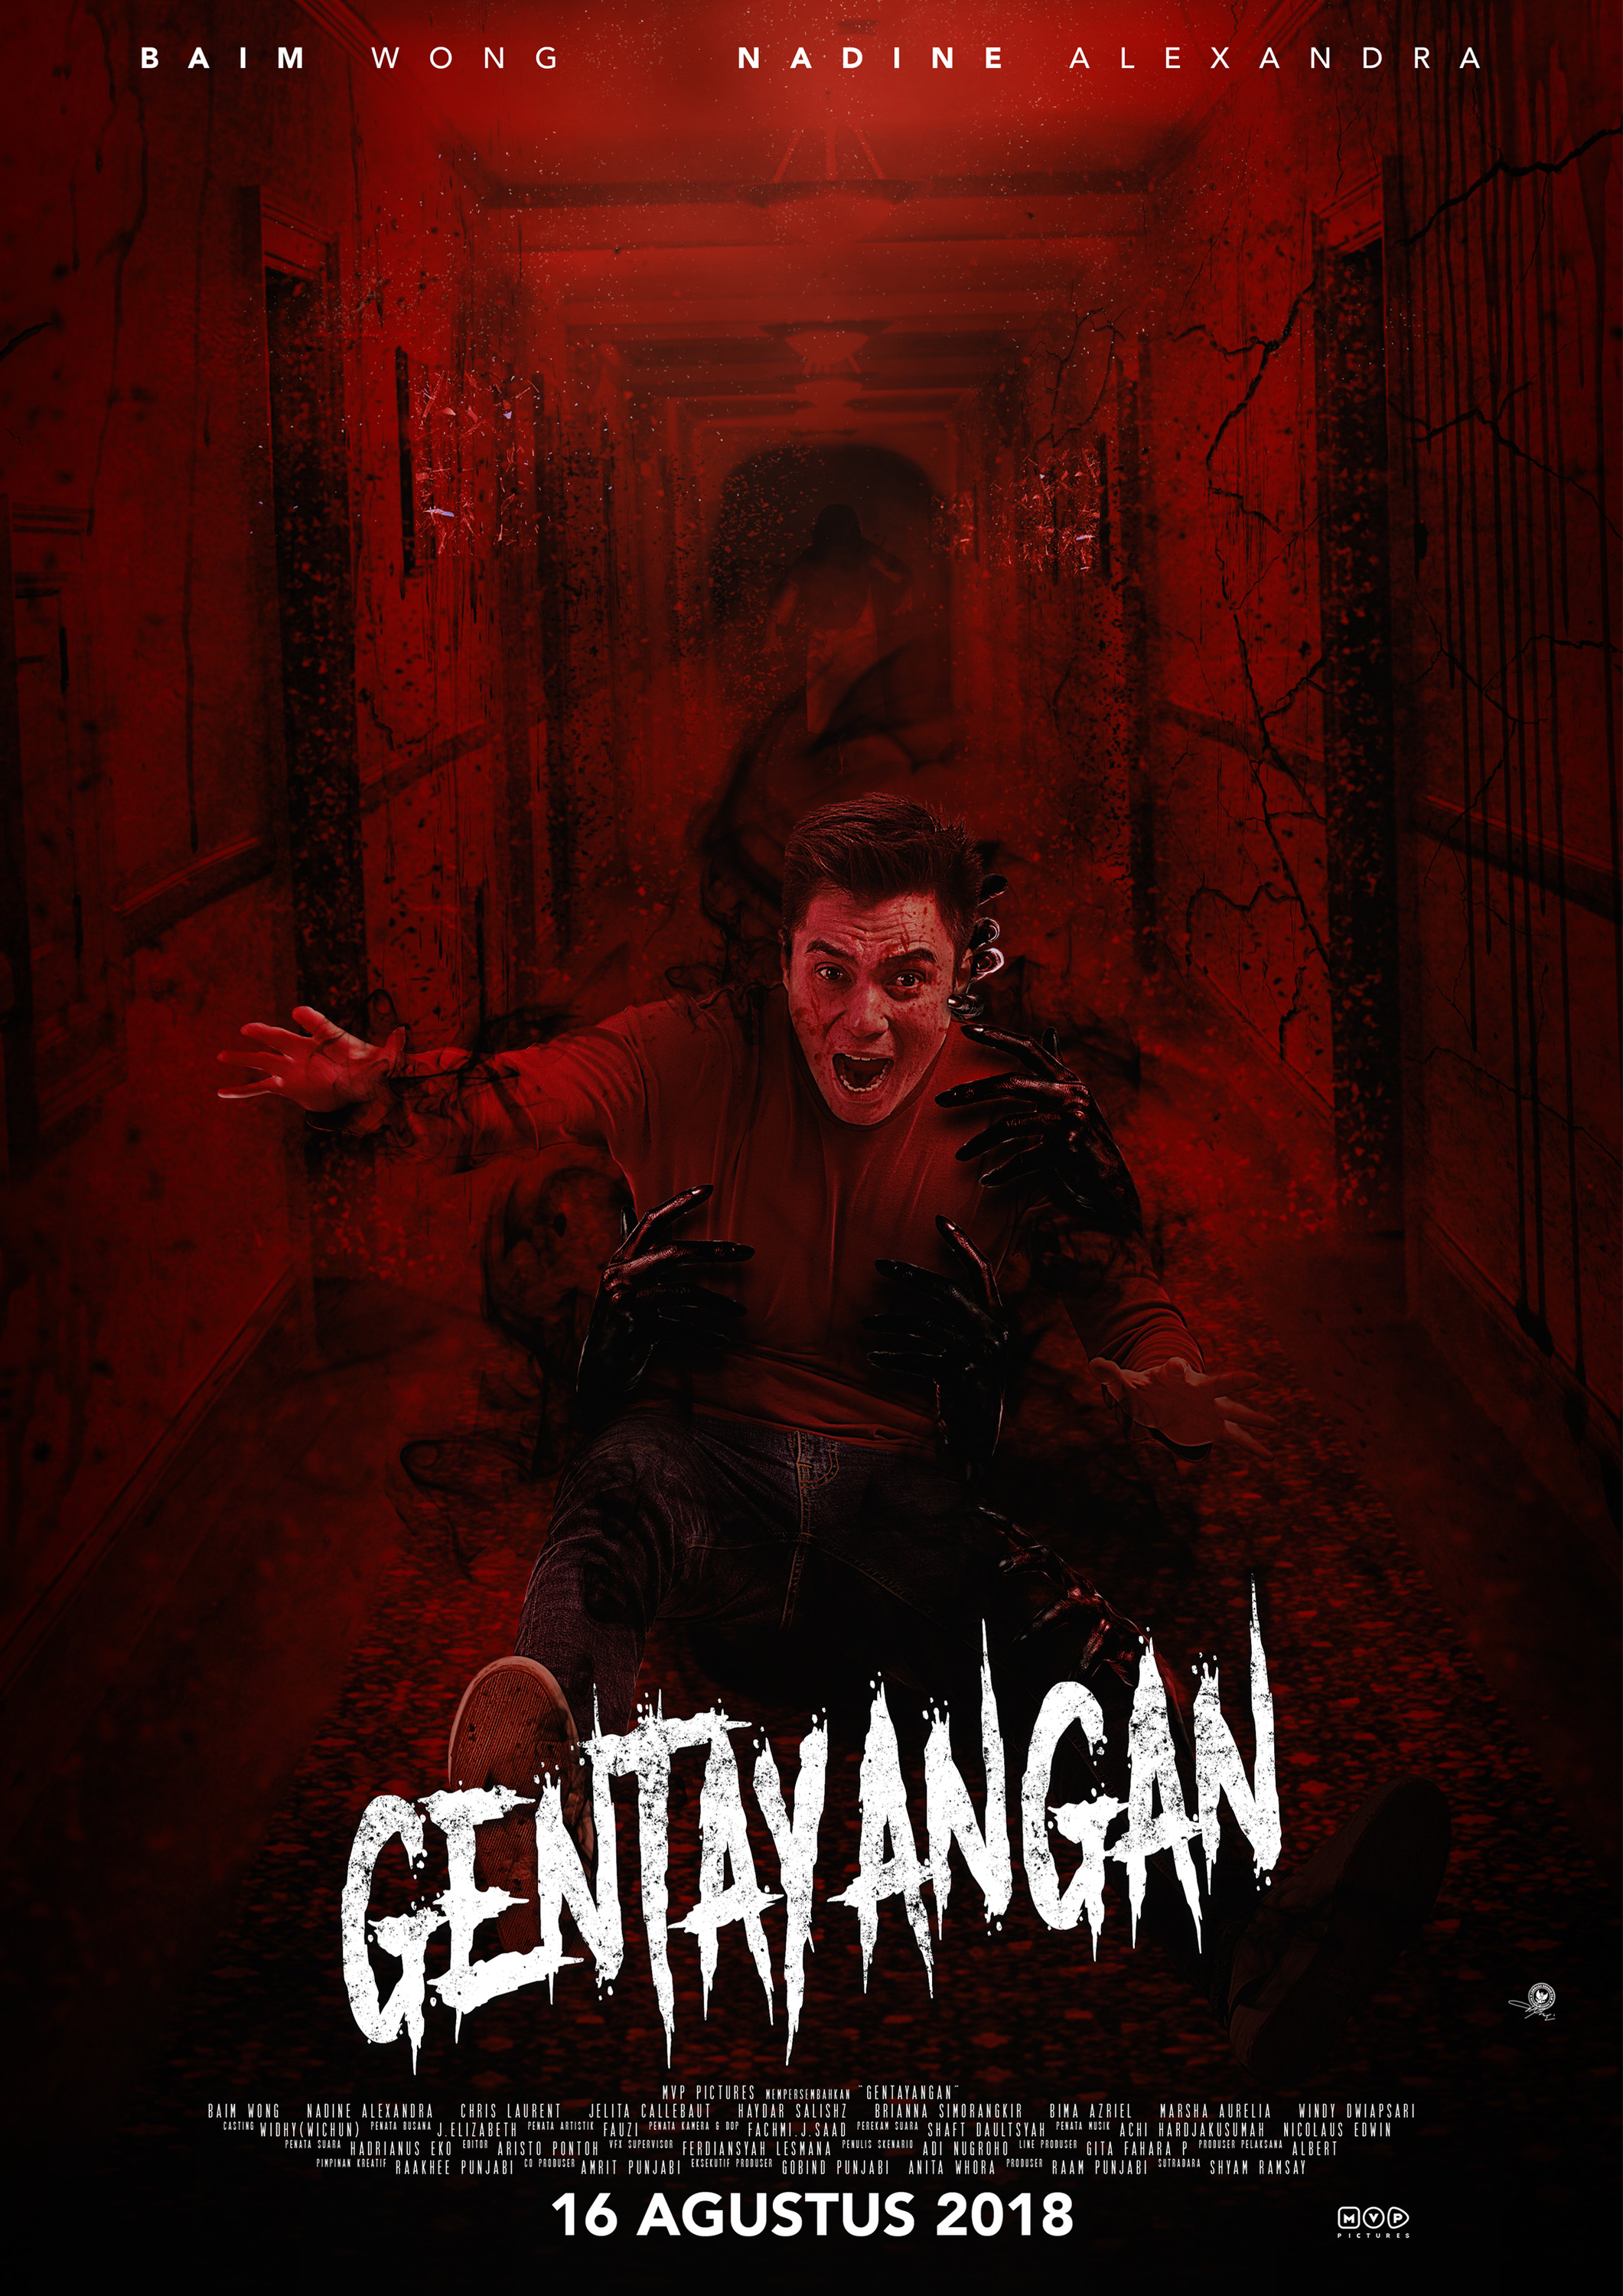 Mega Sized Movie Poster Image for Gentayangan 